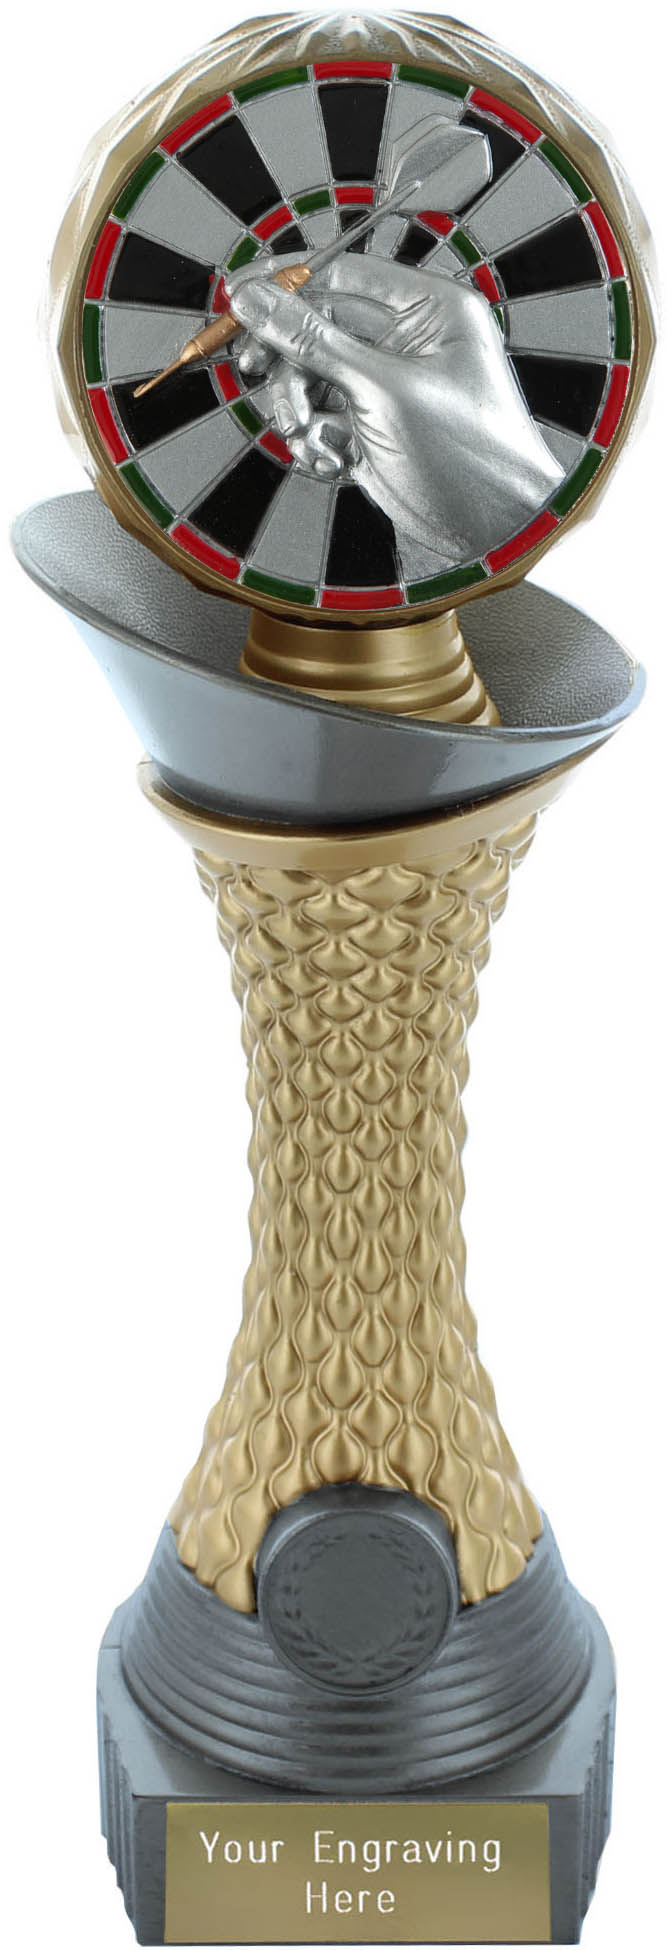 DARTS MEDAL trophy award free engraving gold silver bronze 40 mm dartboard 